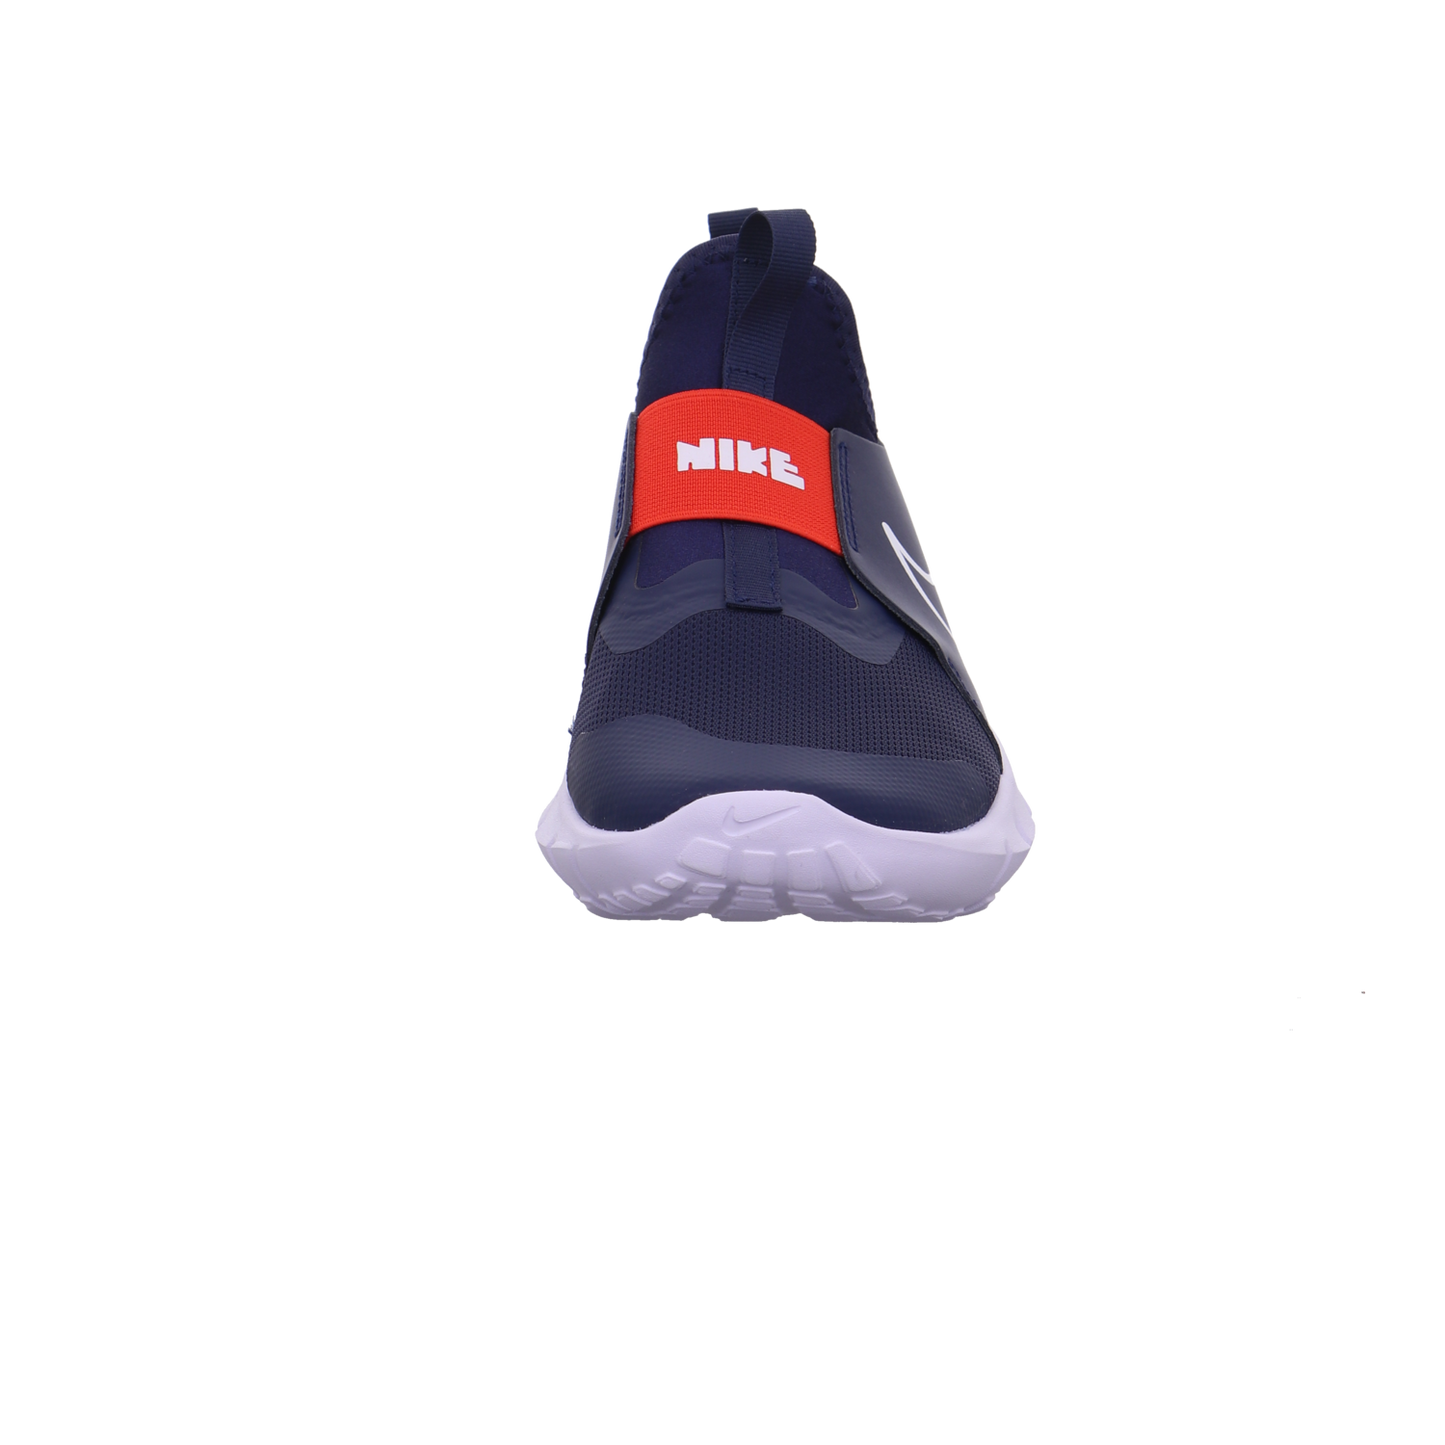 Nike Nike Flex Runner 2 Big Kids blau kombi Bild3